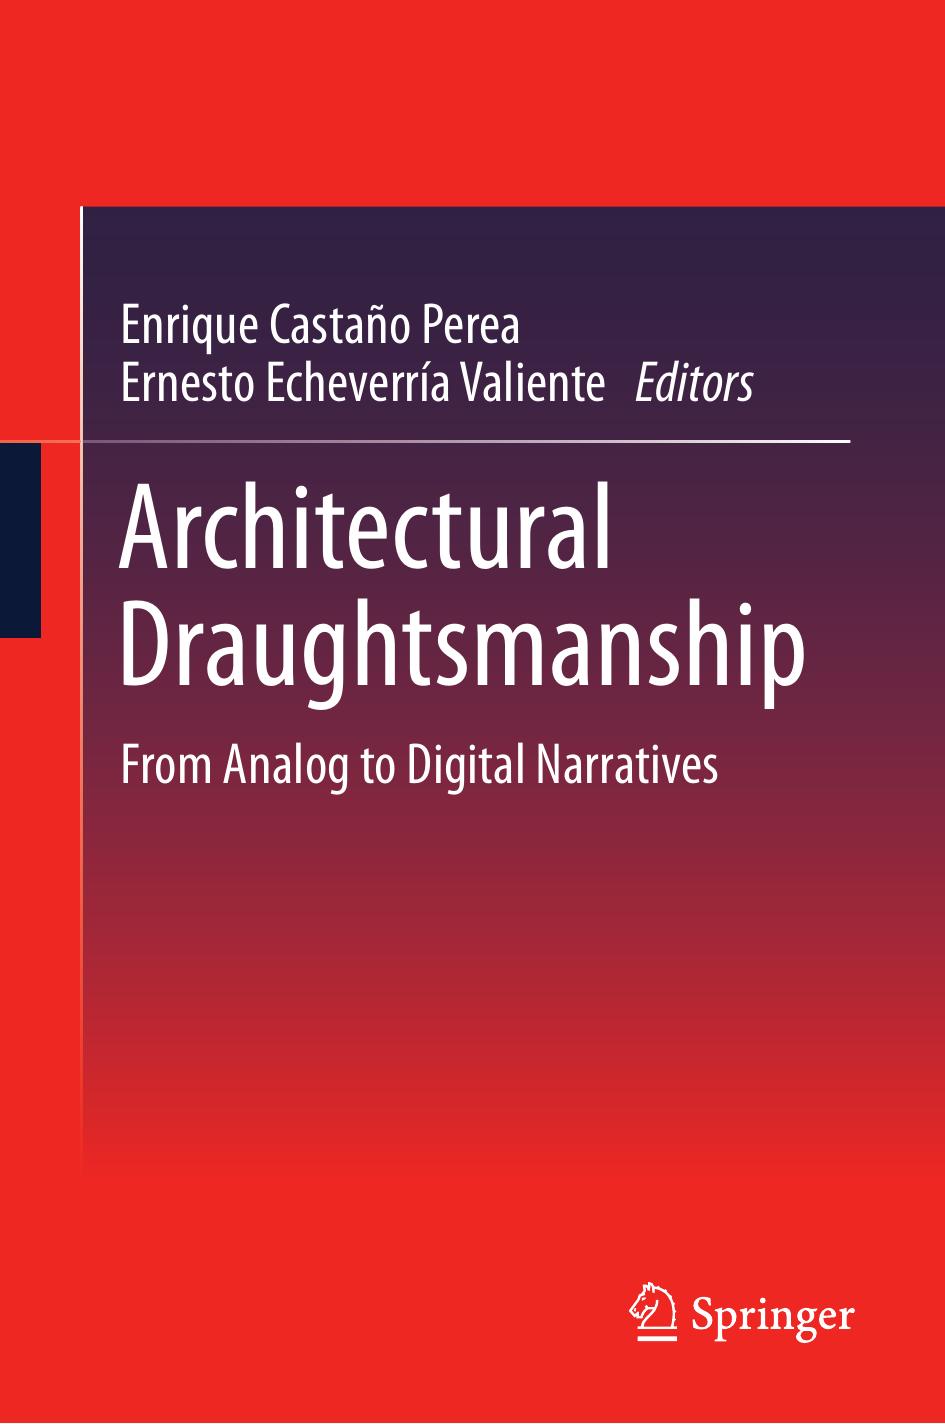 Architectural draughtsmanship from analog to digital narratives 2018